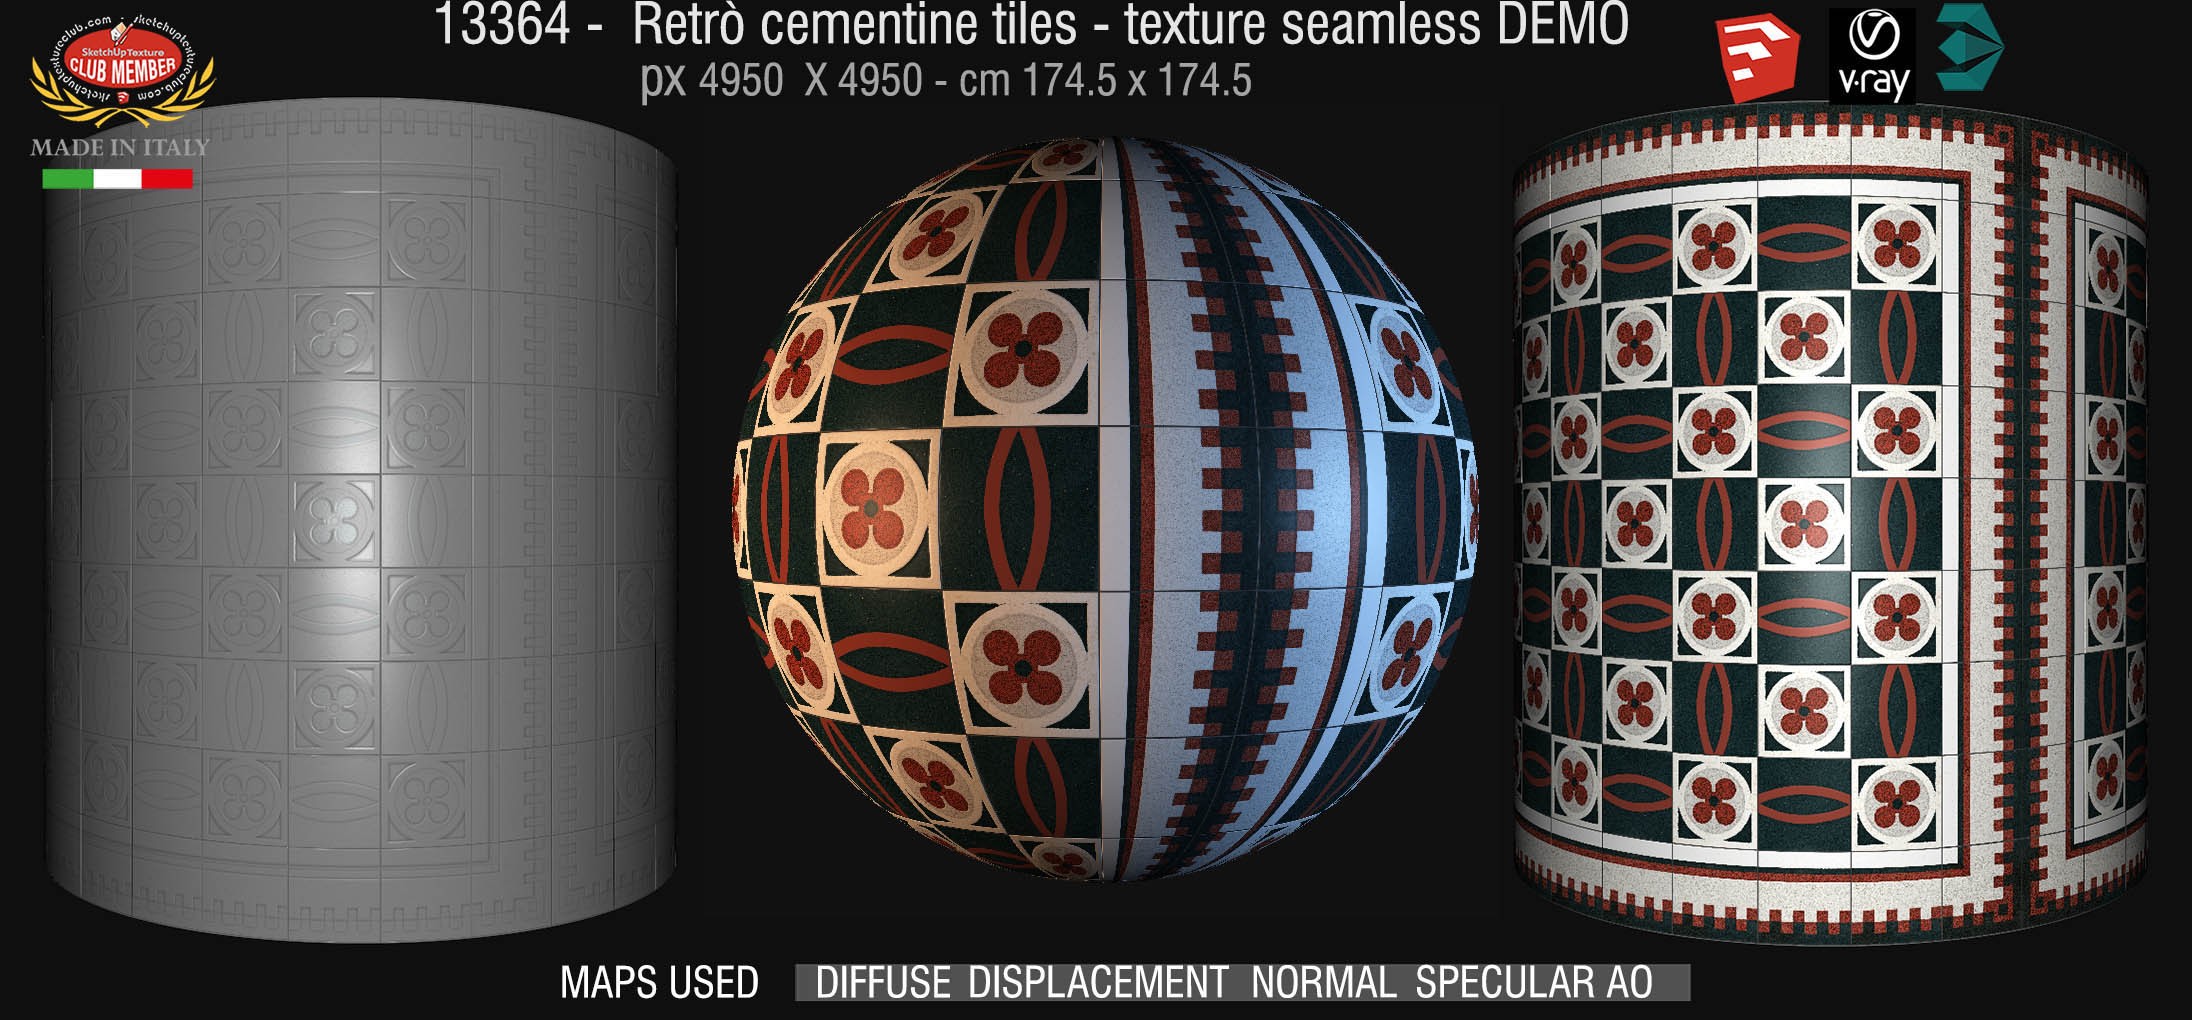 13364 retrò cementine tiles - texture seamless + maps DEMO